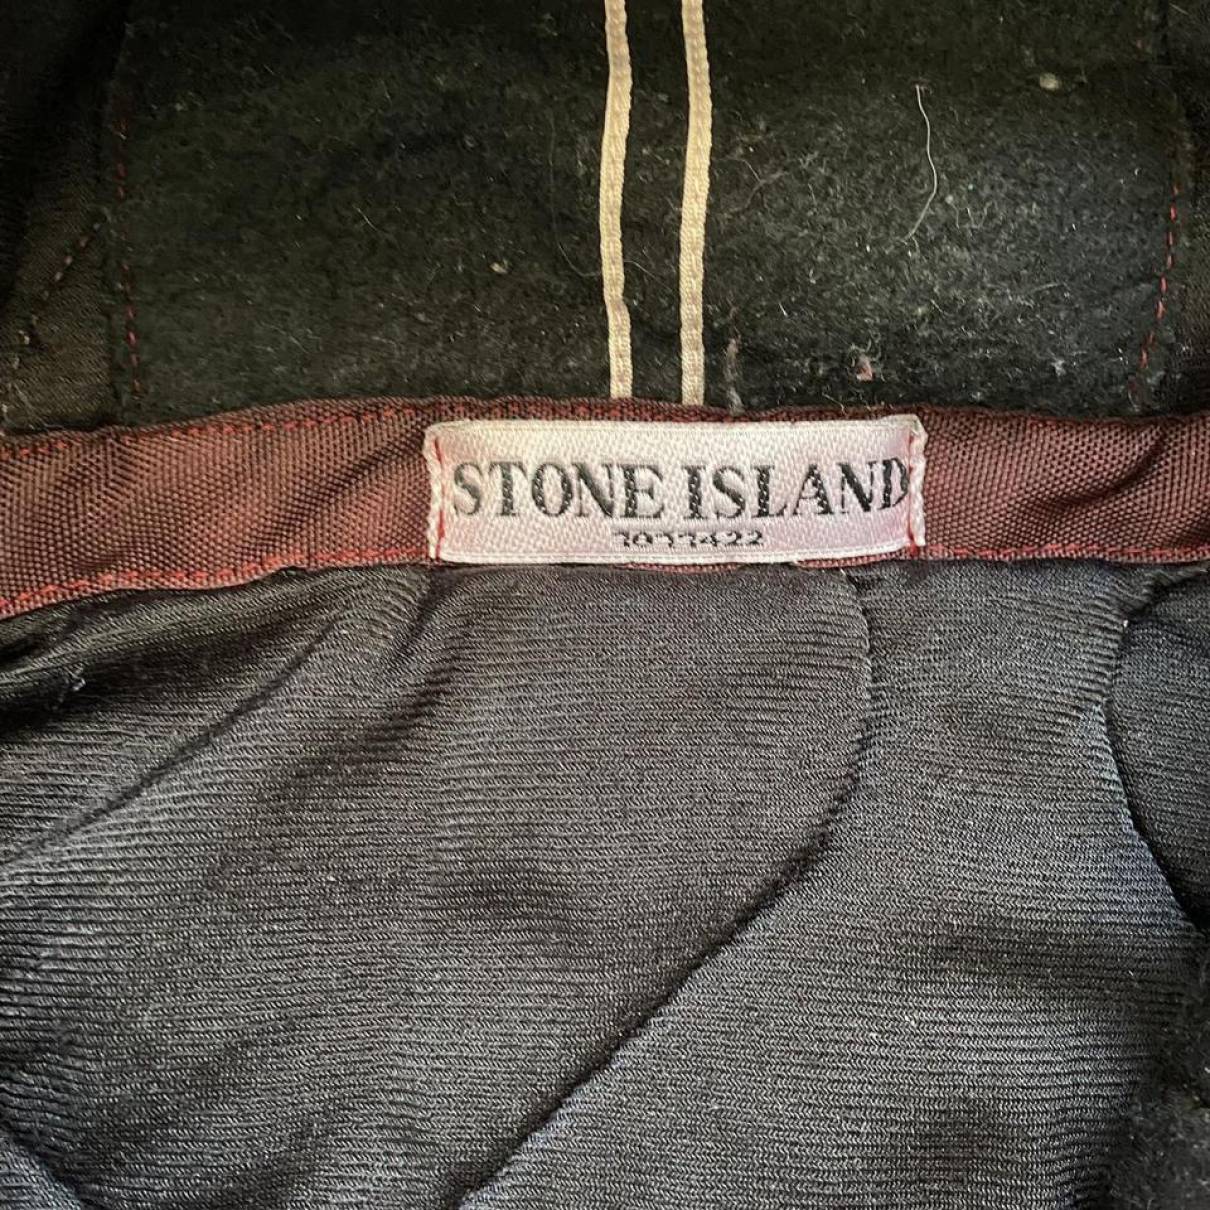 Buy Stone Island Jacket online - Vintage